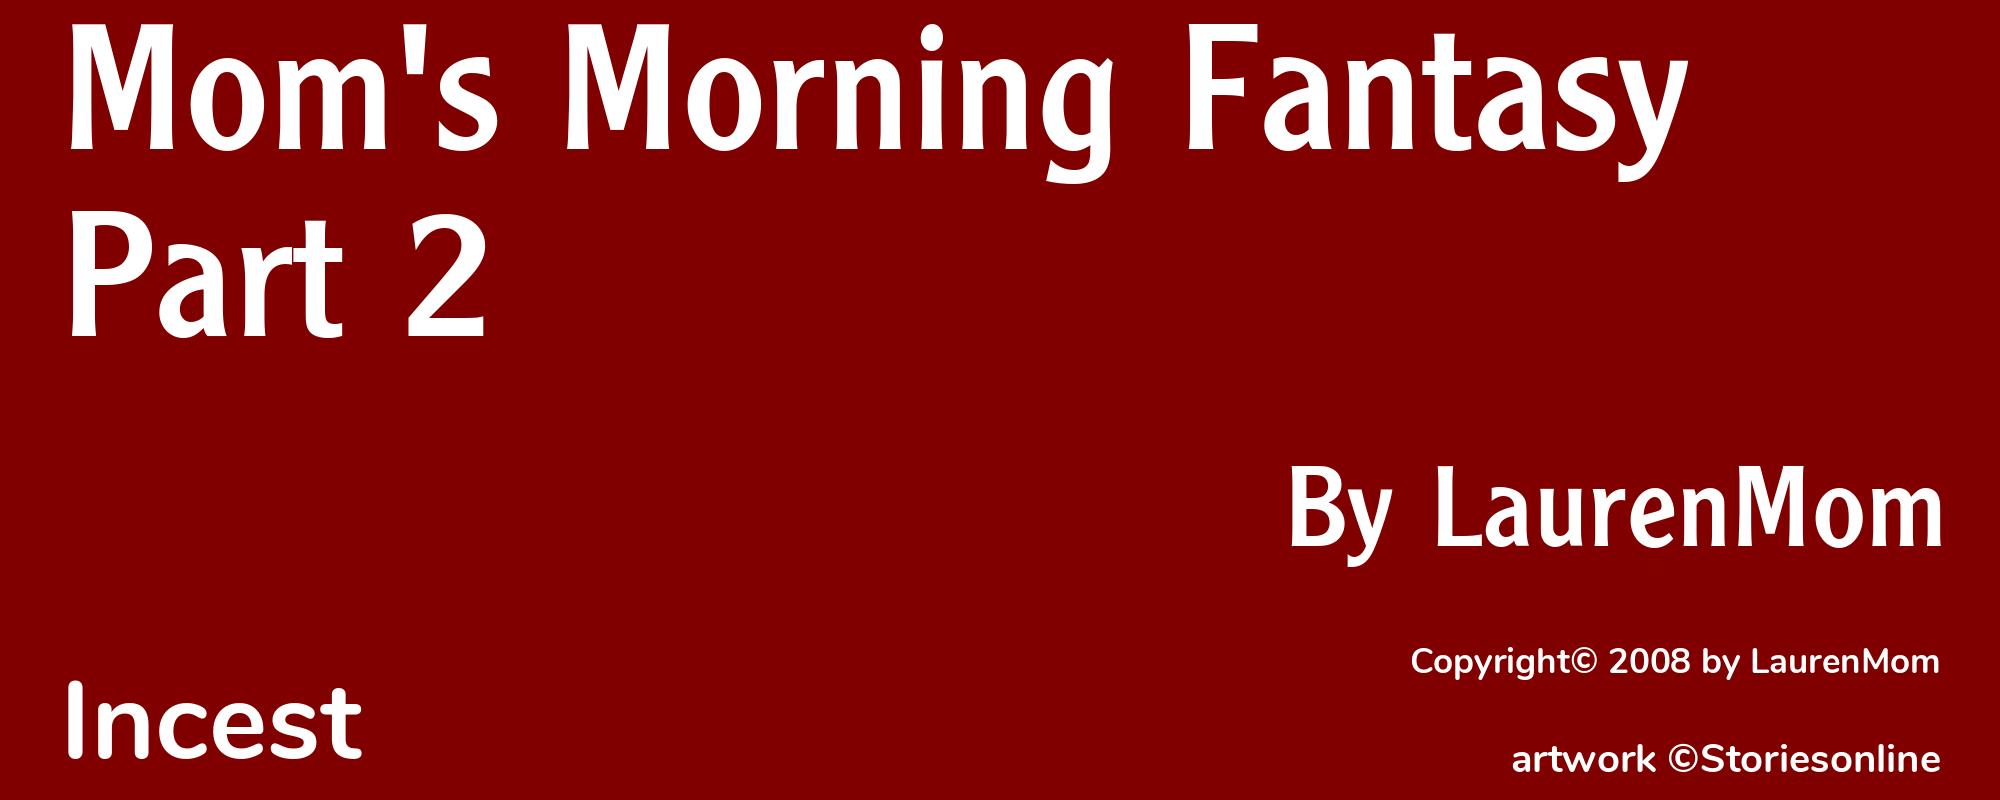 Mom's Morning Fantasy Part 2 - Cover